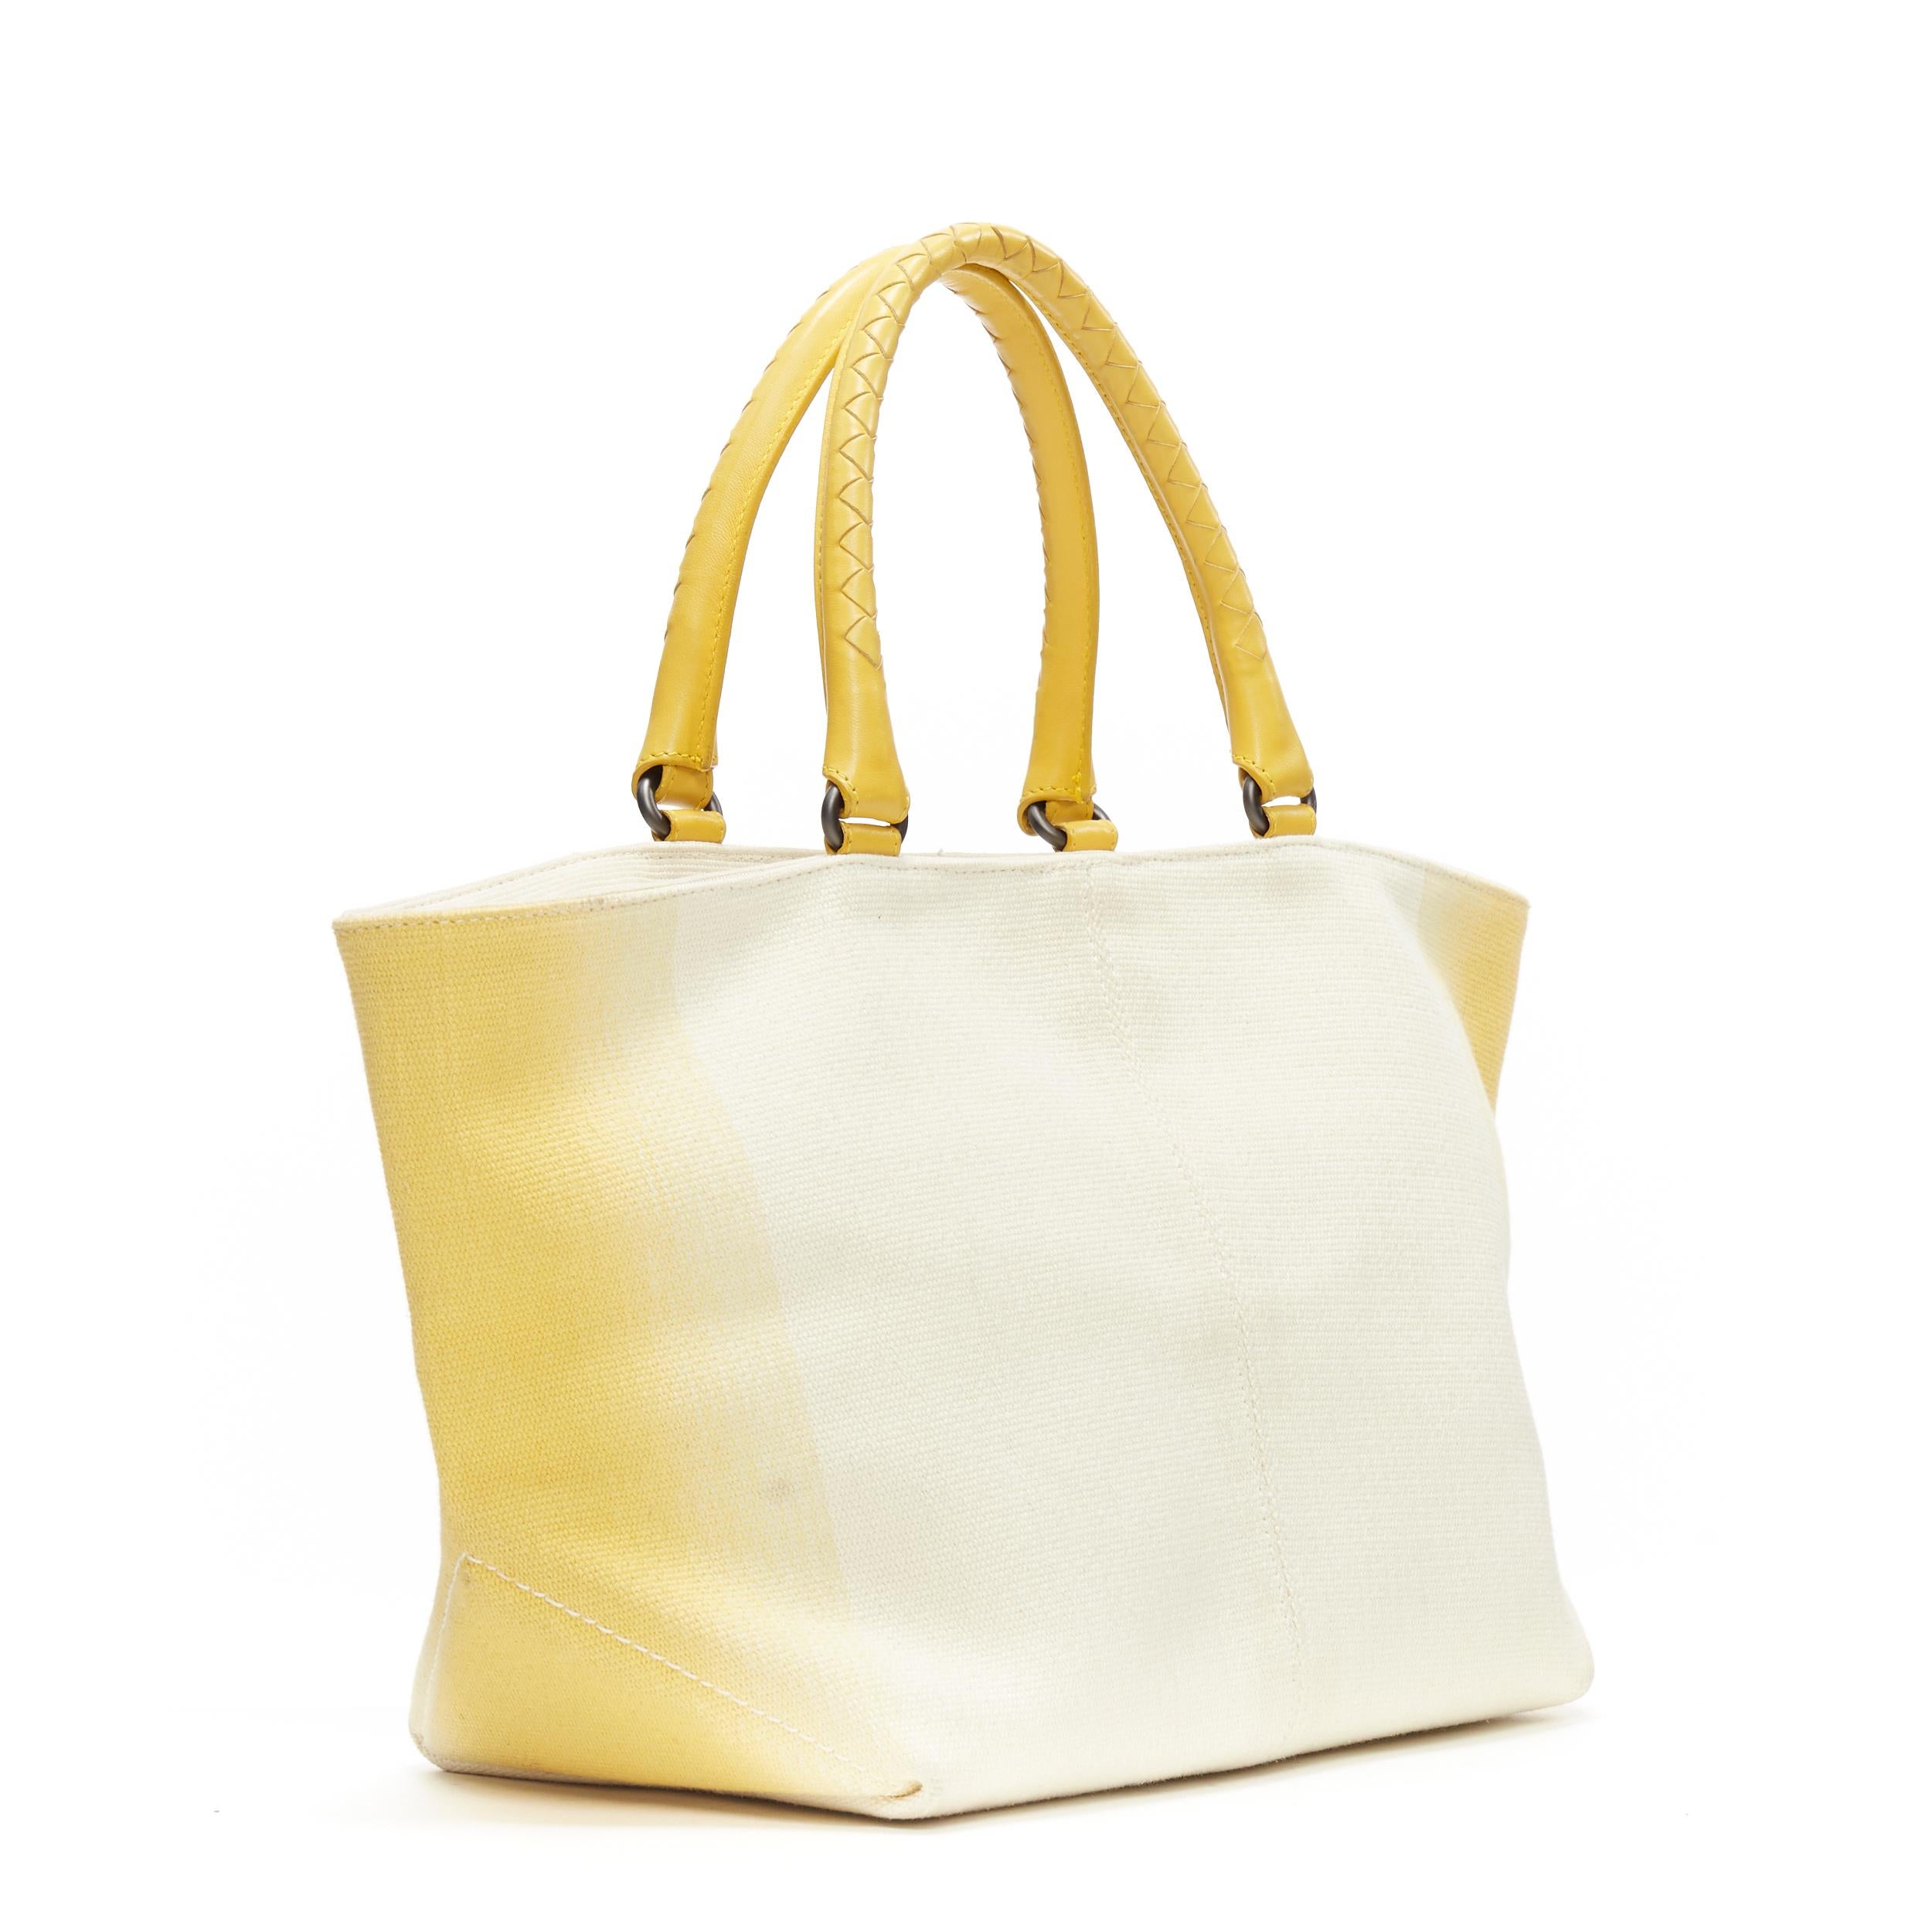 White BOTTEGA VENETA beige yellow ombre dye intrecciato woven leather handle tote bag